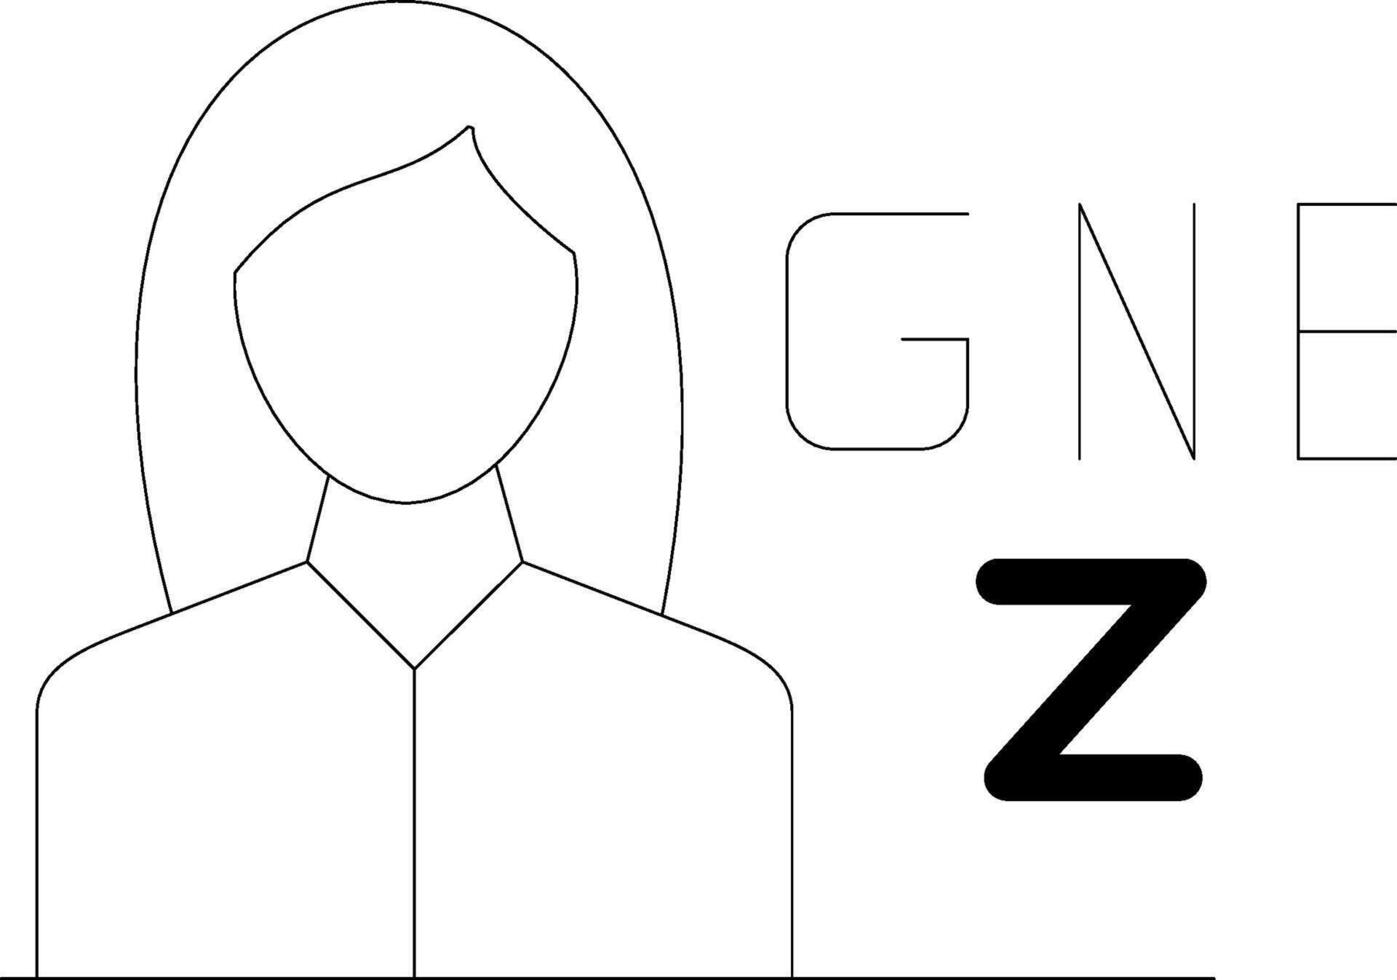 Gen Z Female Creative Icon Design vector